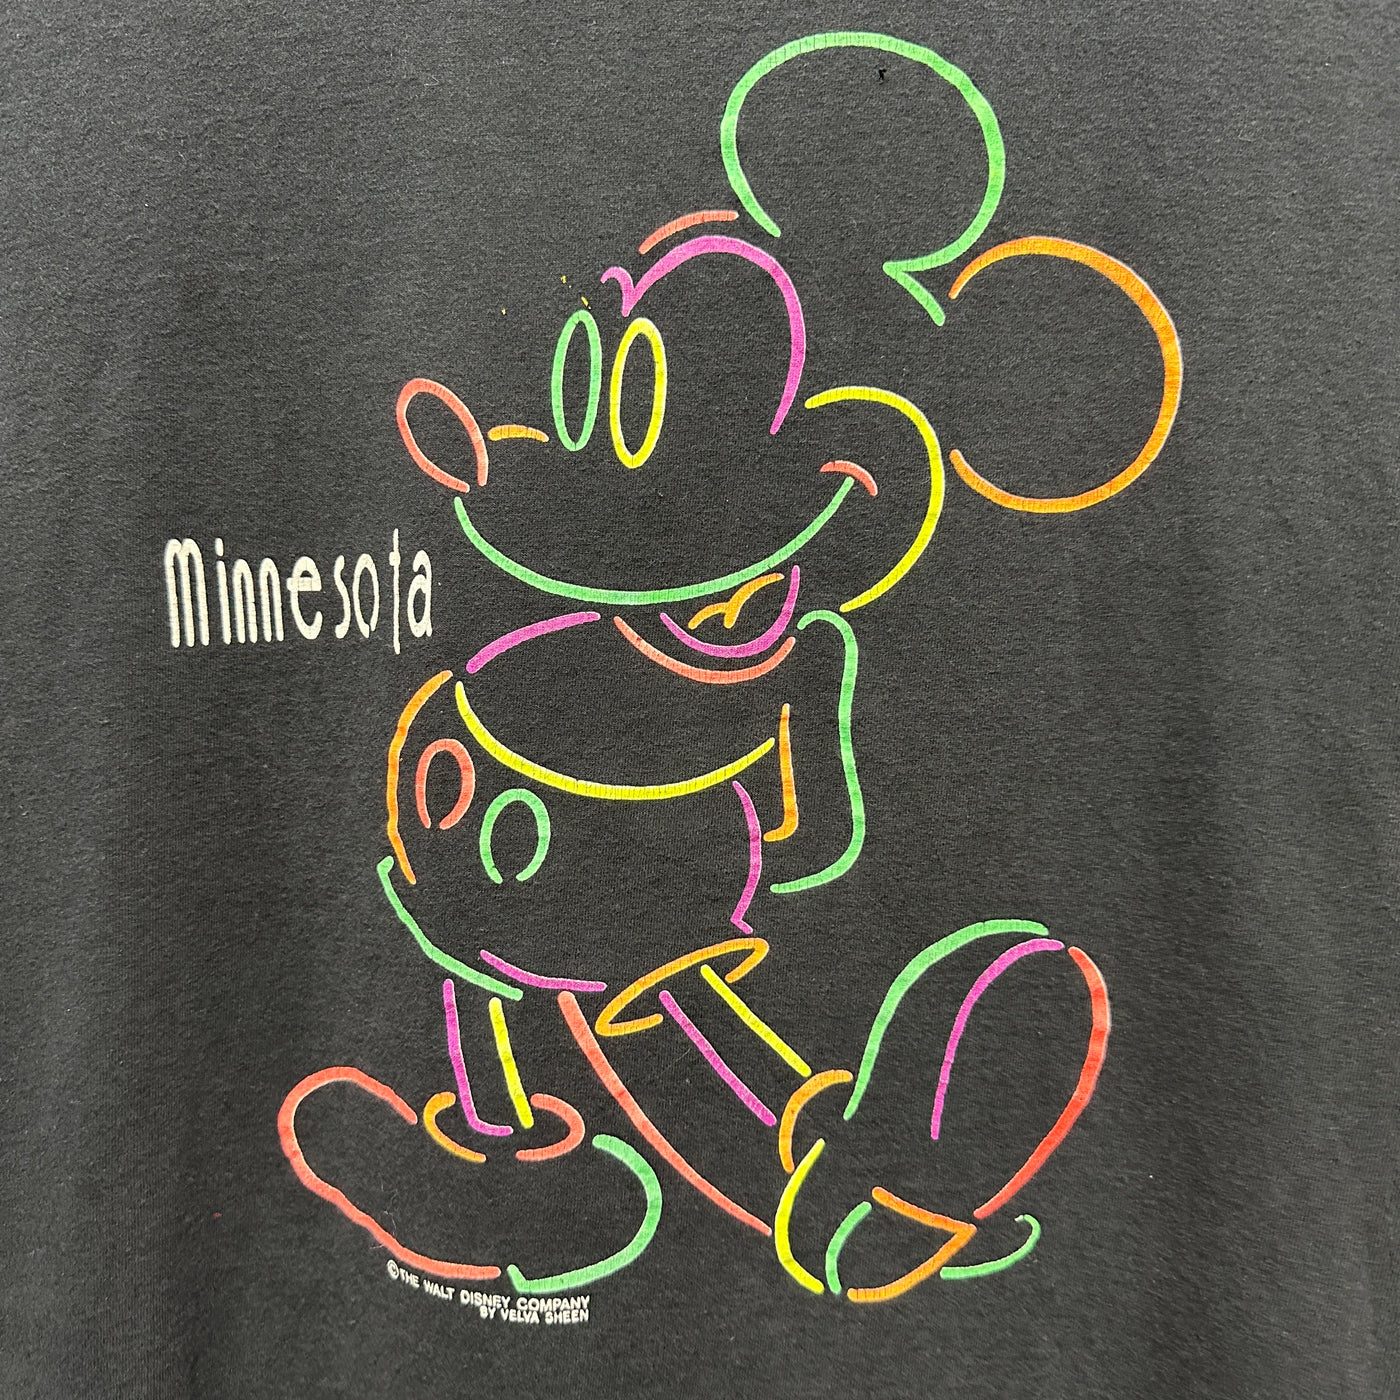 90's Mickey Mouse Neon Minnesota Black Cartoon T-shirt sz L